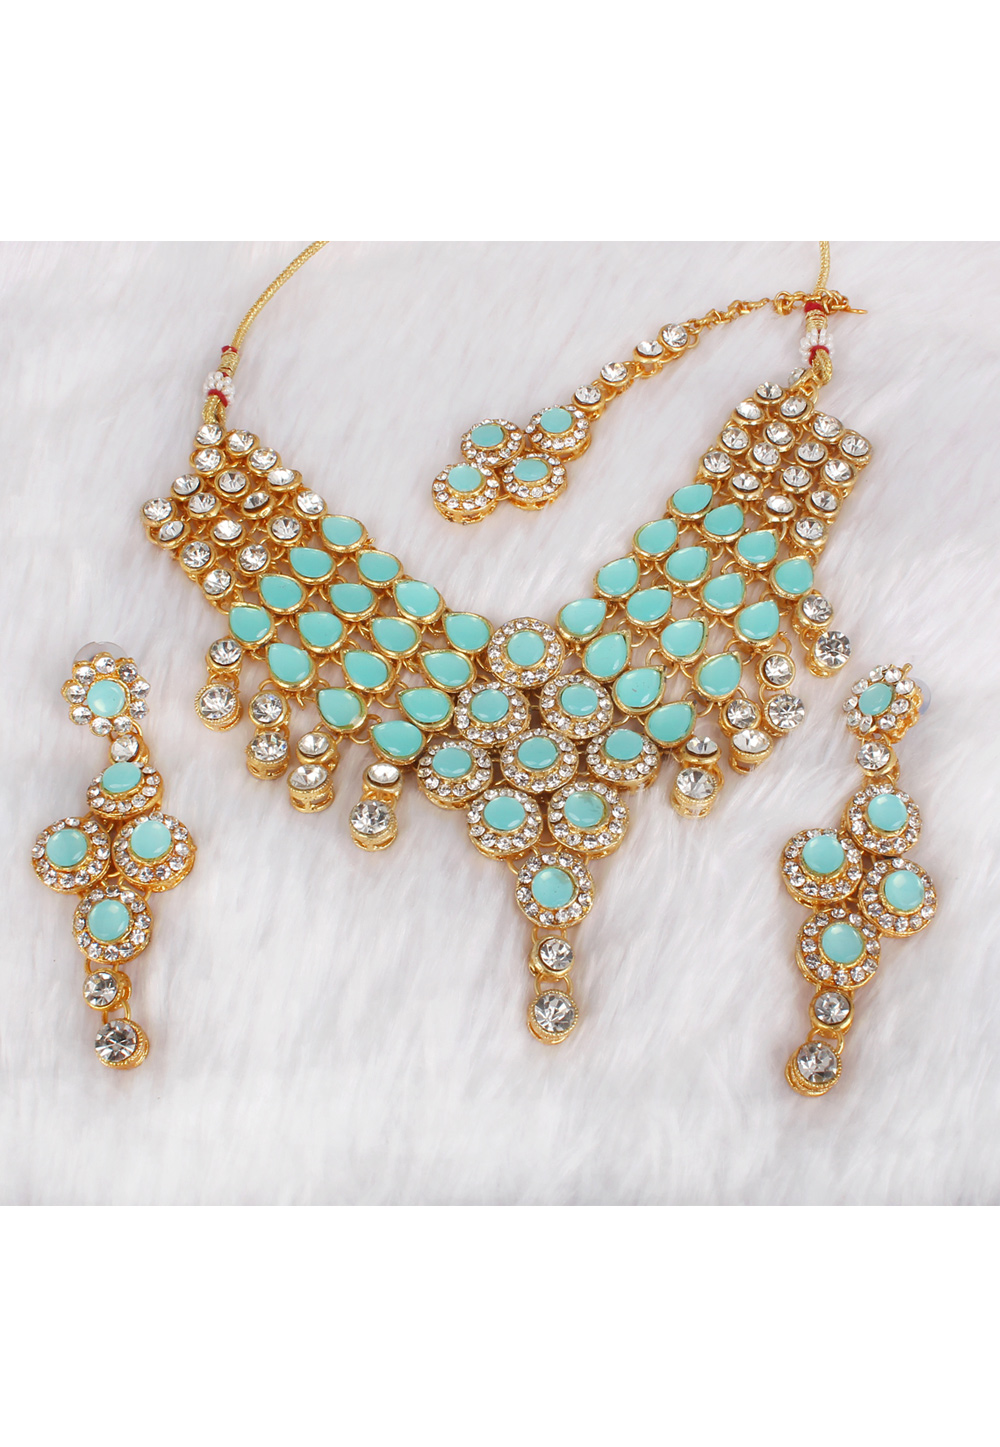 Buy Handmade Mina Jhumka Earrings in Blue Color